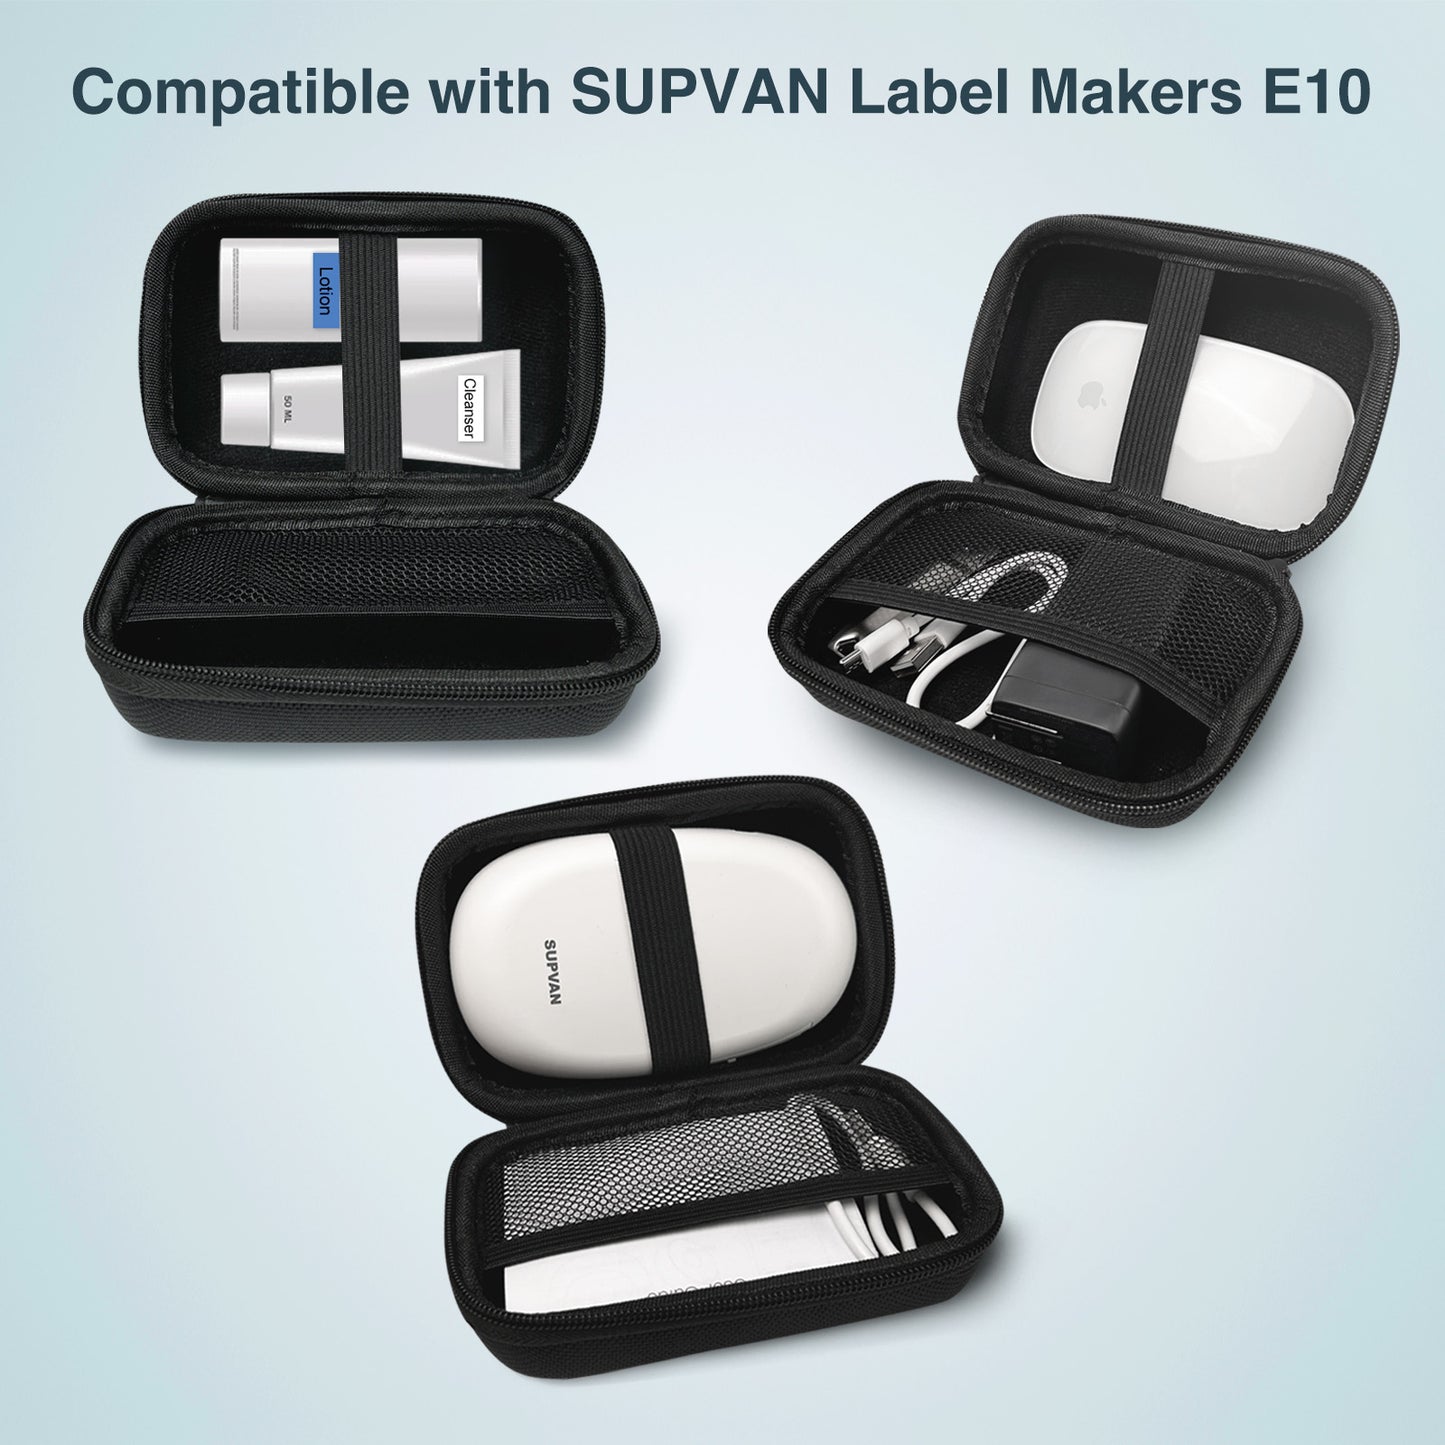 SUPVAN Nylon Hard Protective Travel Case for E10 Label Maker and Tapes